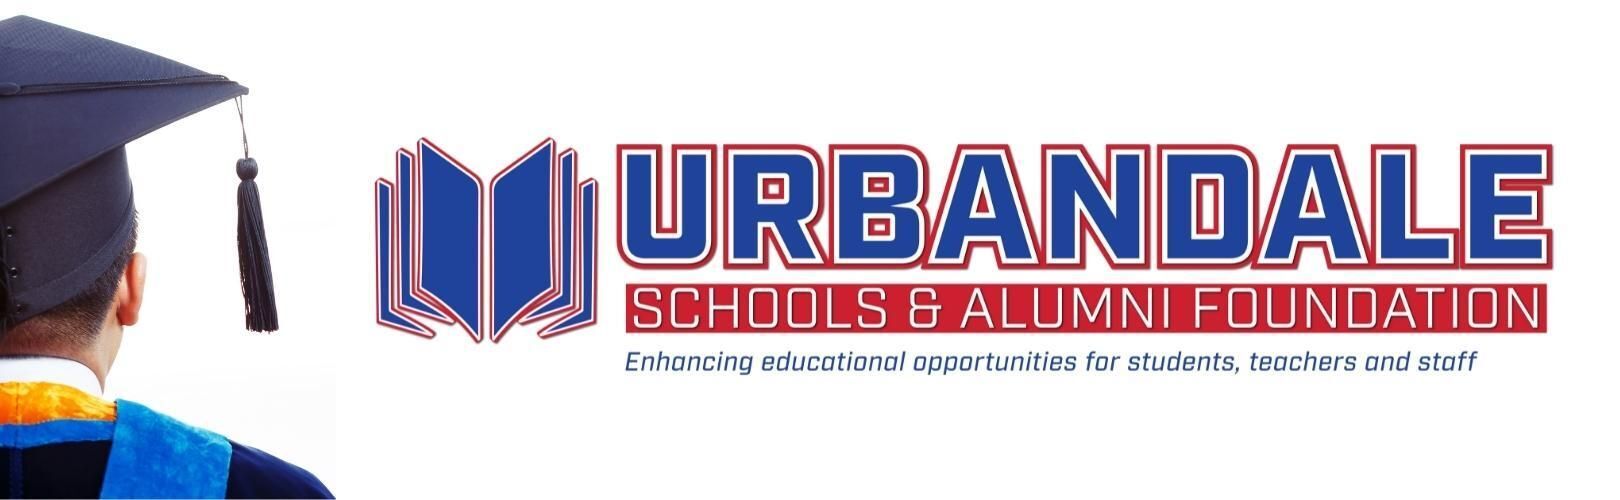 Urbandale Schools and Alumni Foundation logo